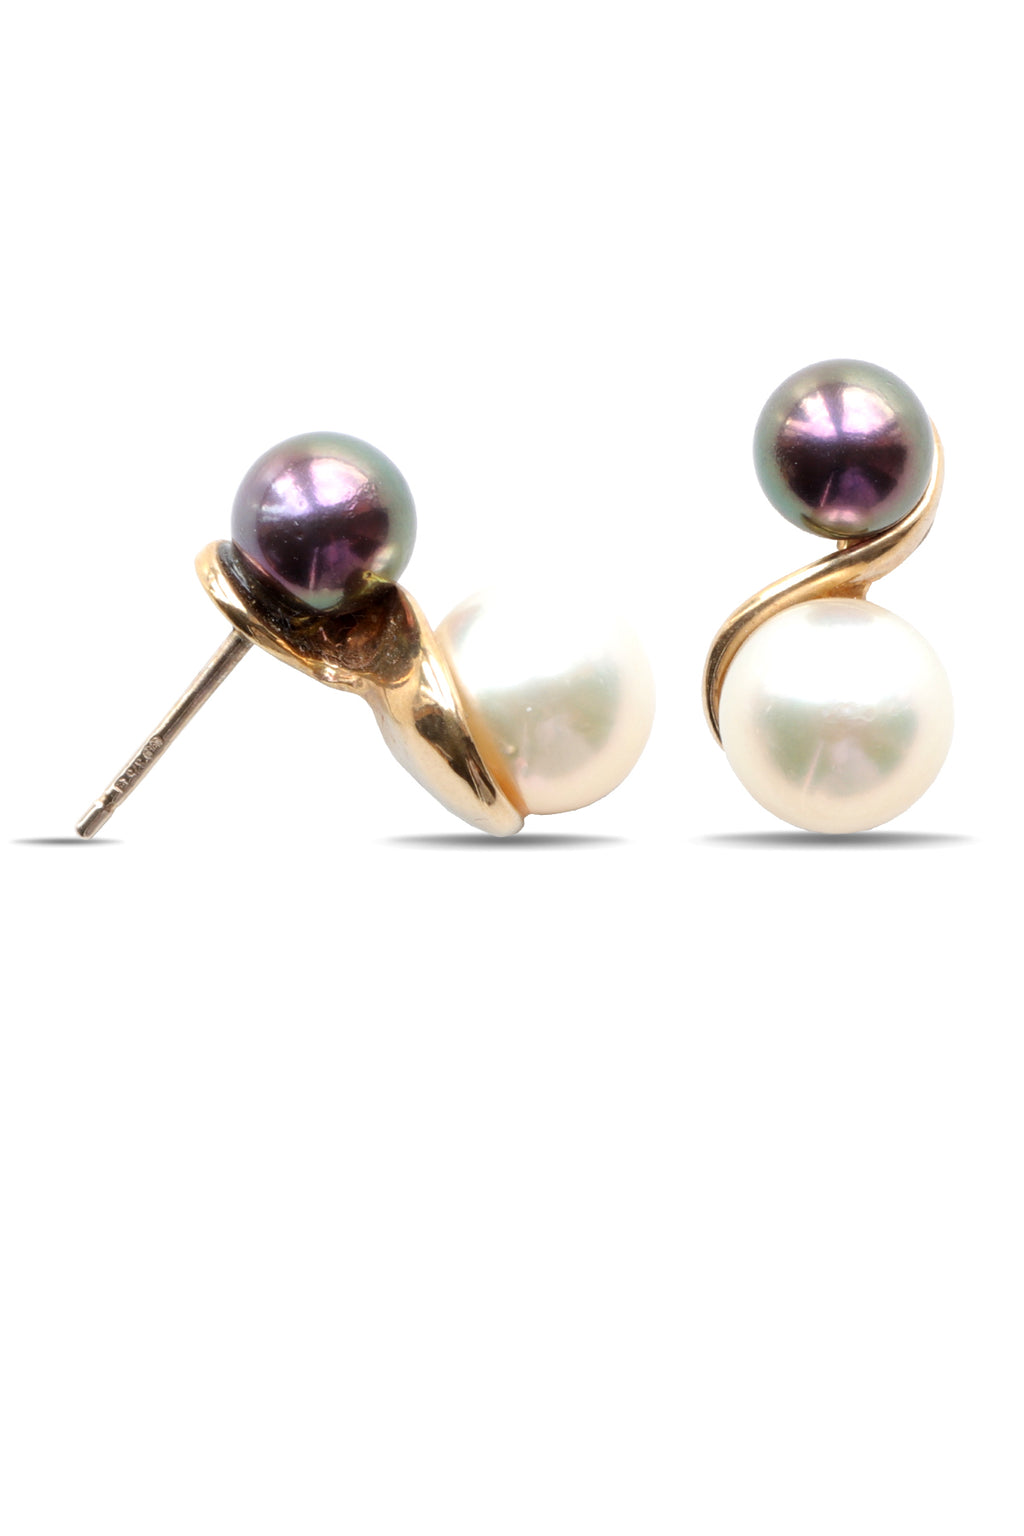 9ct Gold Earring Pearl/Black Pearl